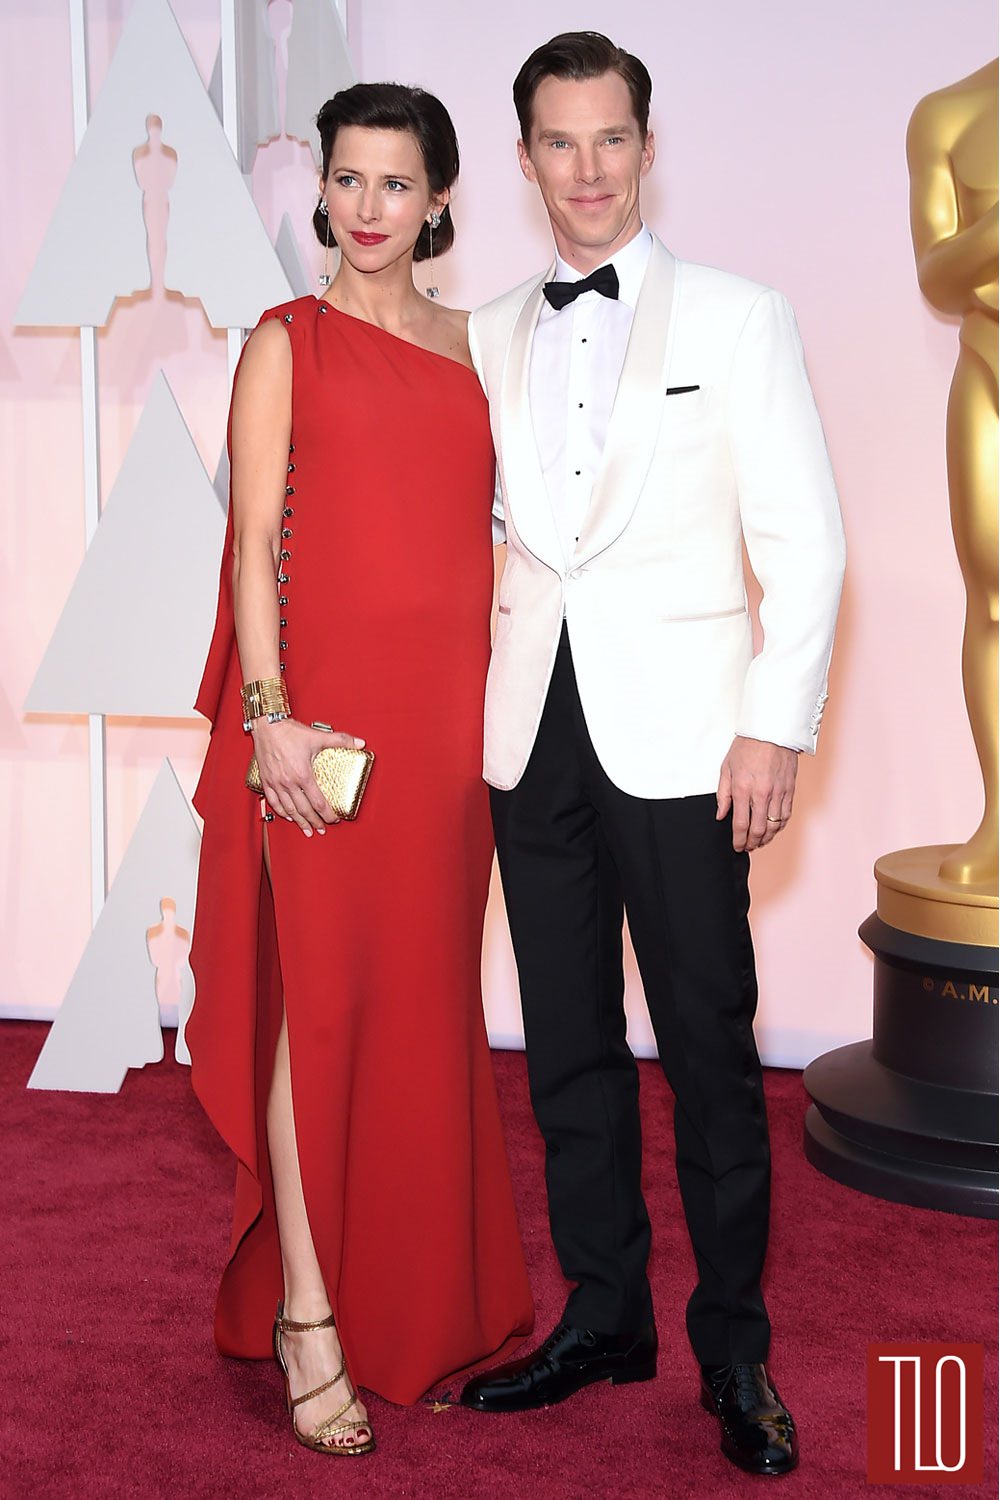 Sophie-Hunter-Benedict-Cumberbatch-Oscars-2015-Awards-Red-Carpet-Fashion-Lanvin-Tom-Lorenzo-Site-TLO (1)